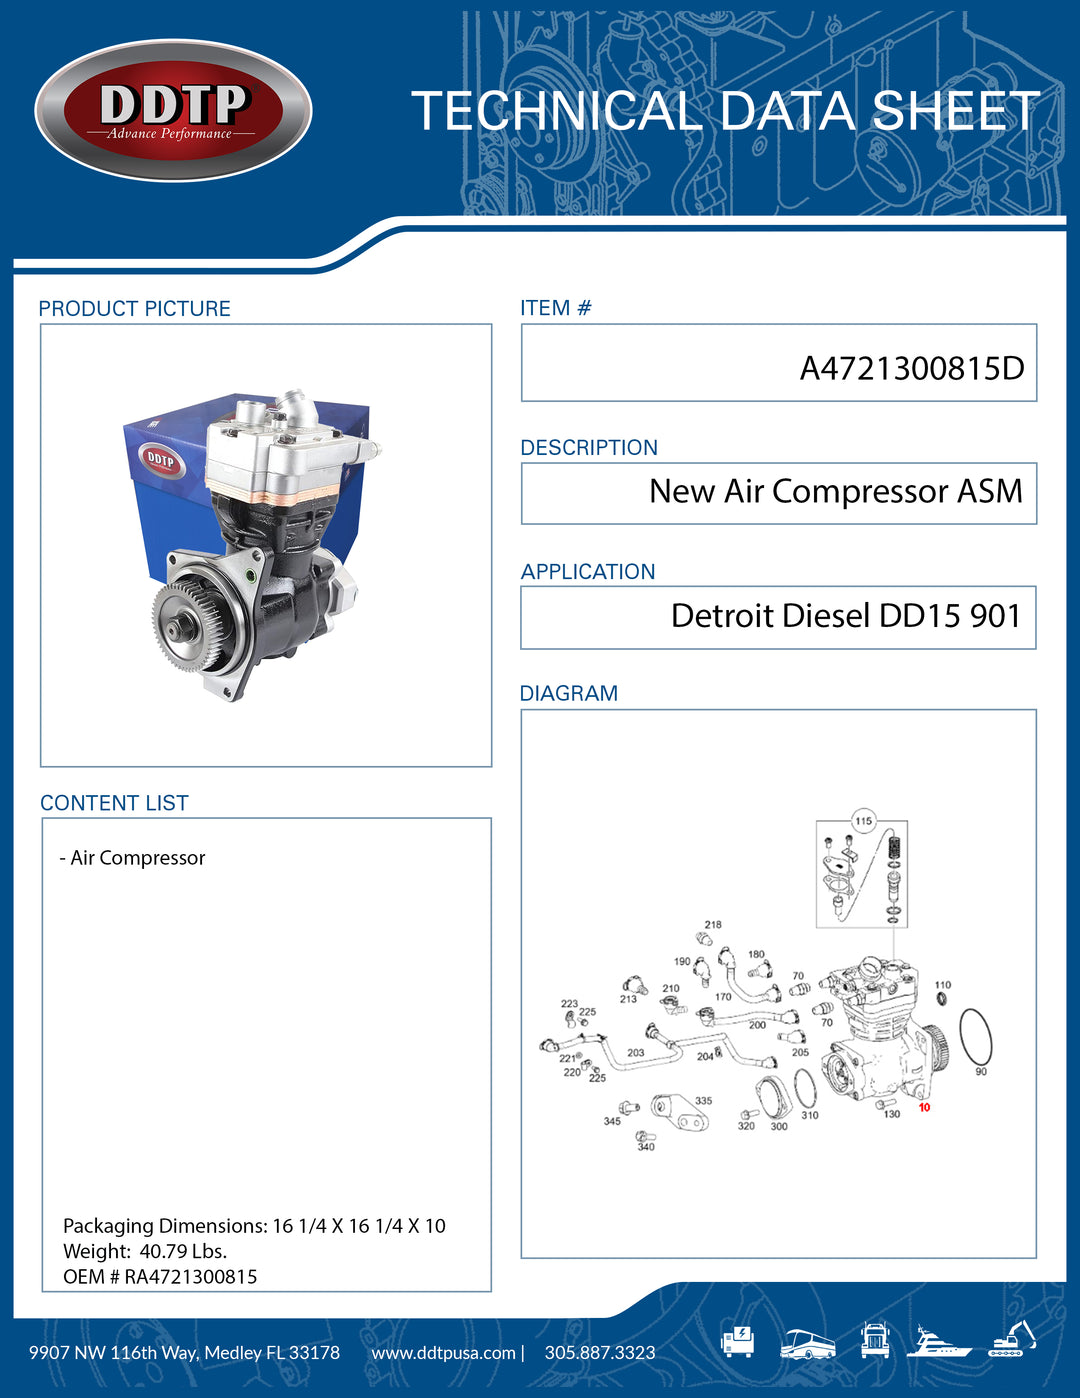 Air Compressor New, DD15 901